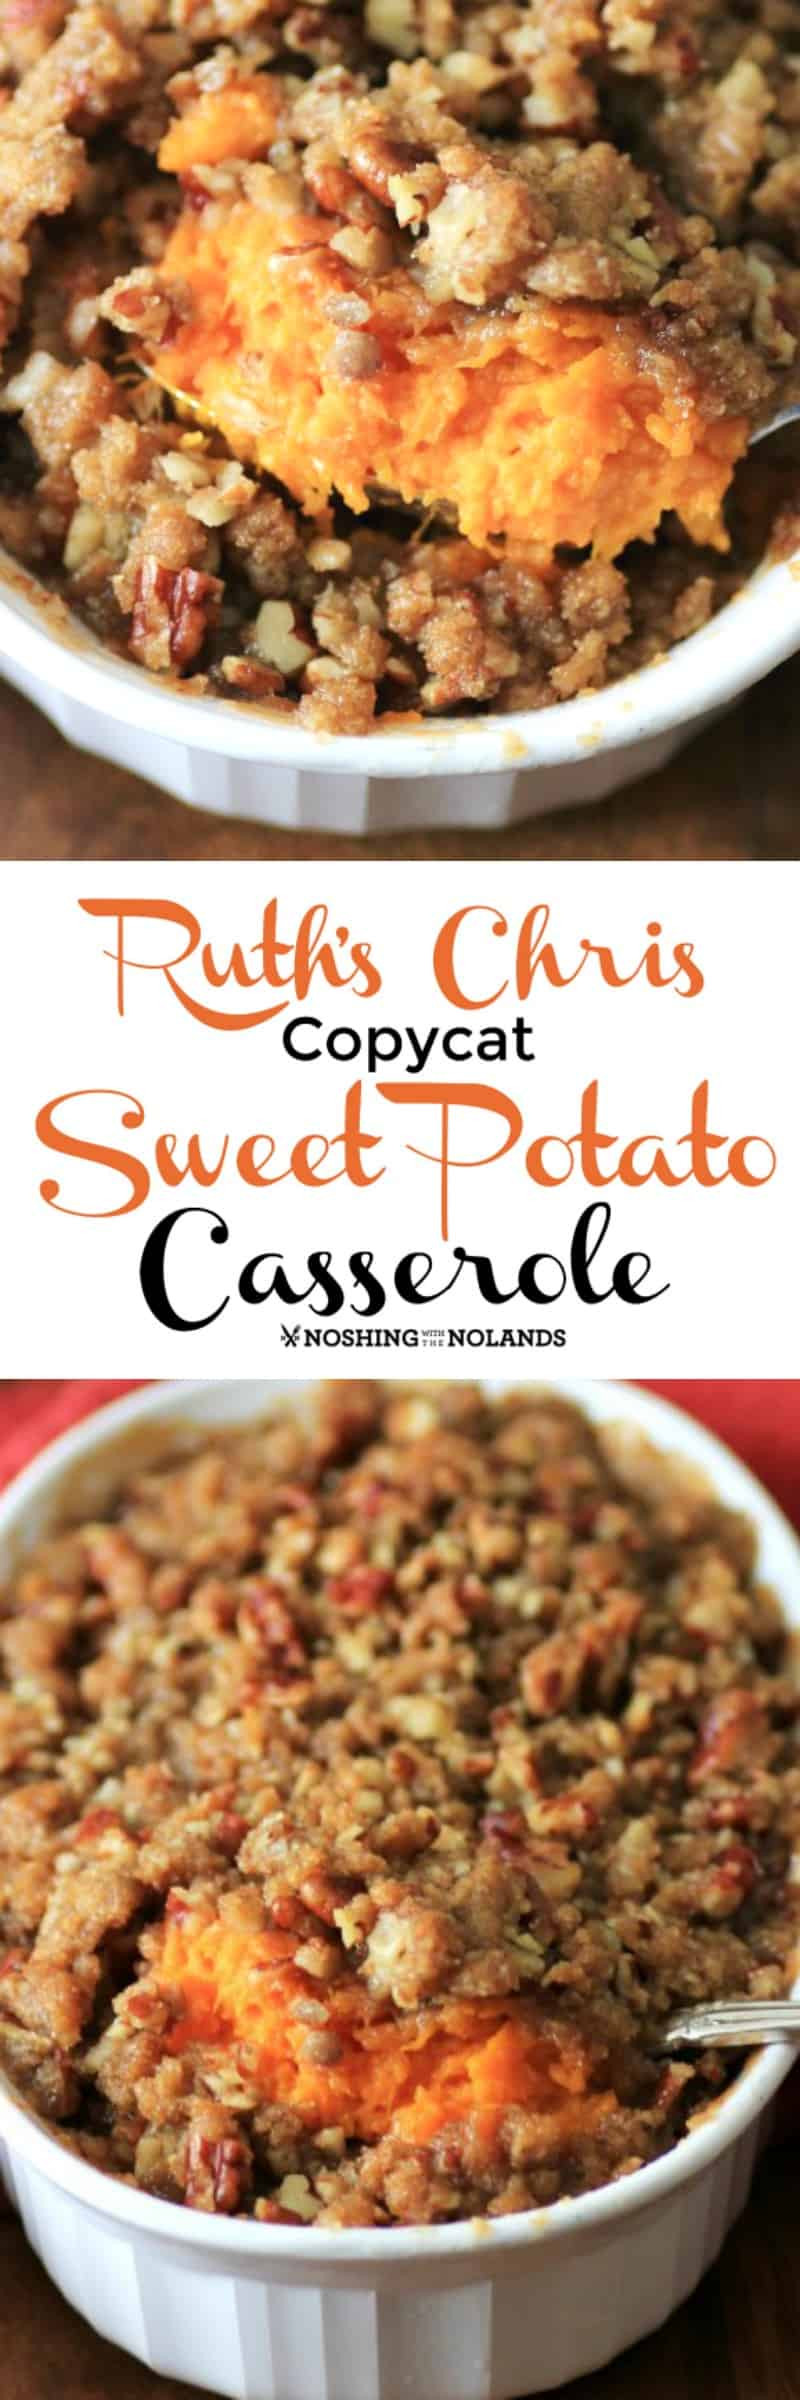 Ruth Chris Sweet Potato Recipe
 MWM Ruth s Chris Copycat Sweet Potato Casserole